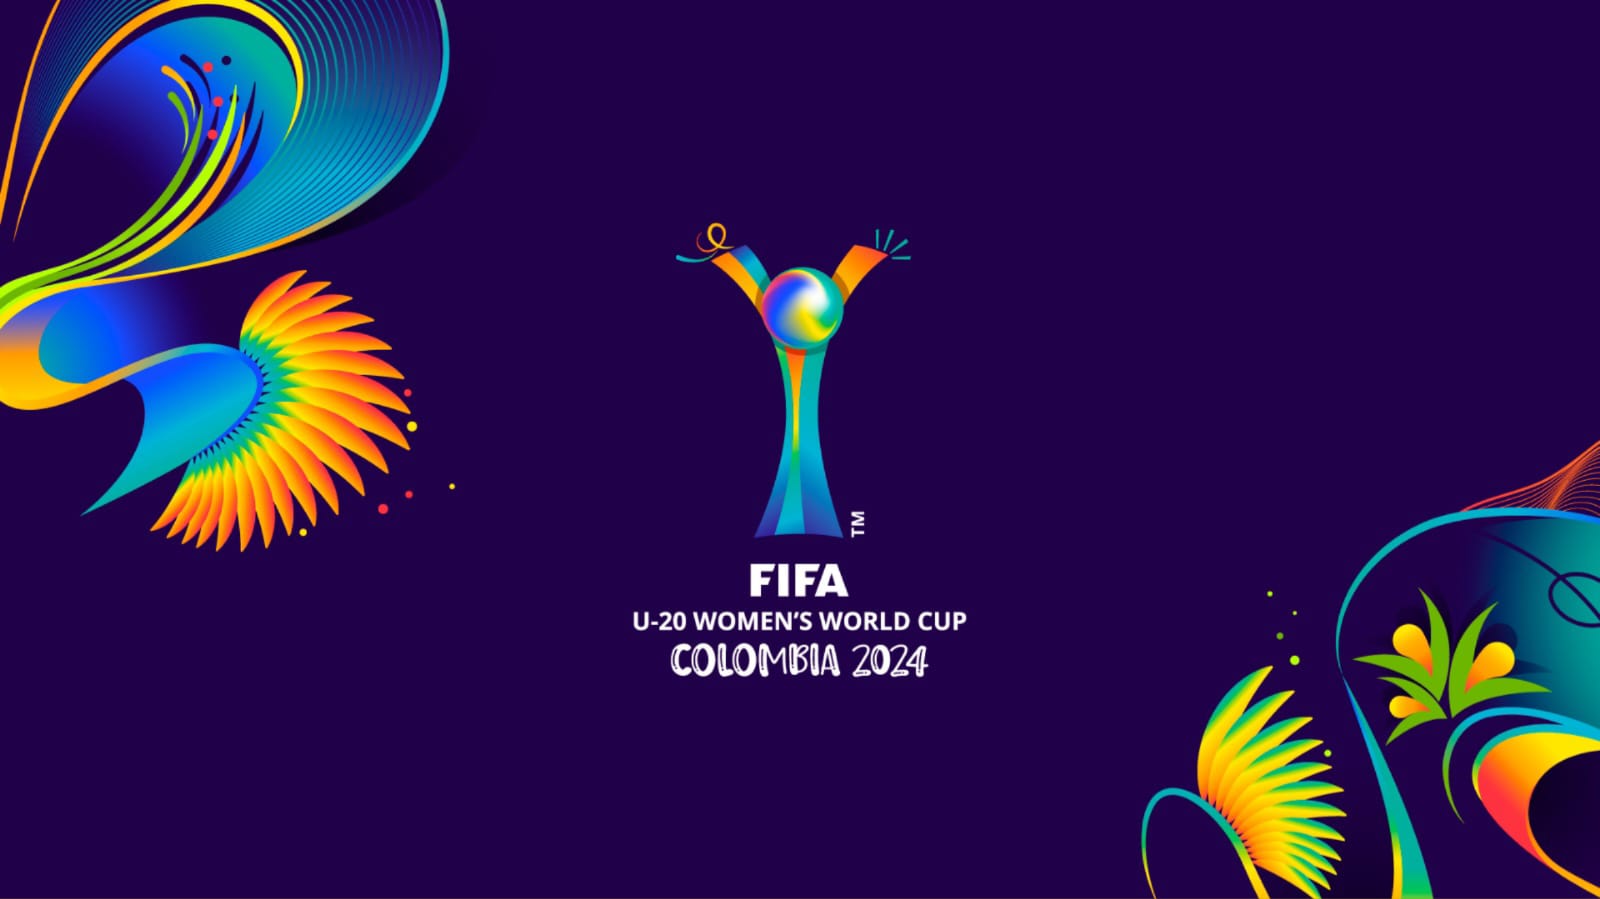 FIFA revela emblema oficial e identidad del Mundial femenil Sub-20 Colombia 2024